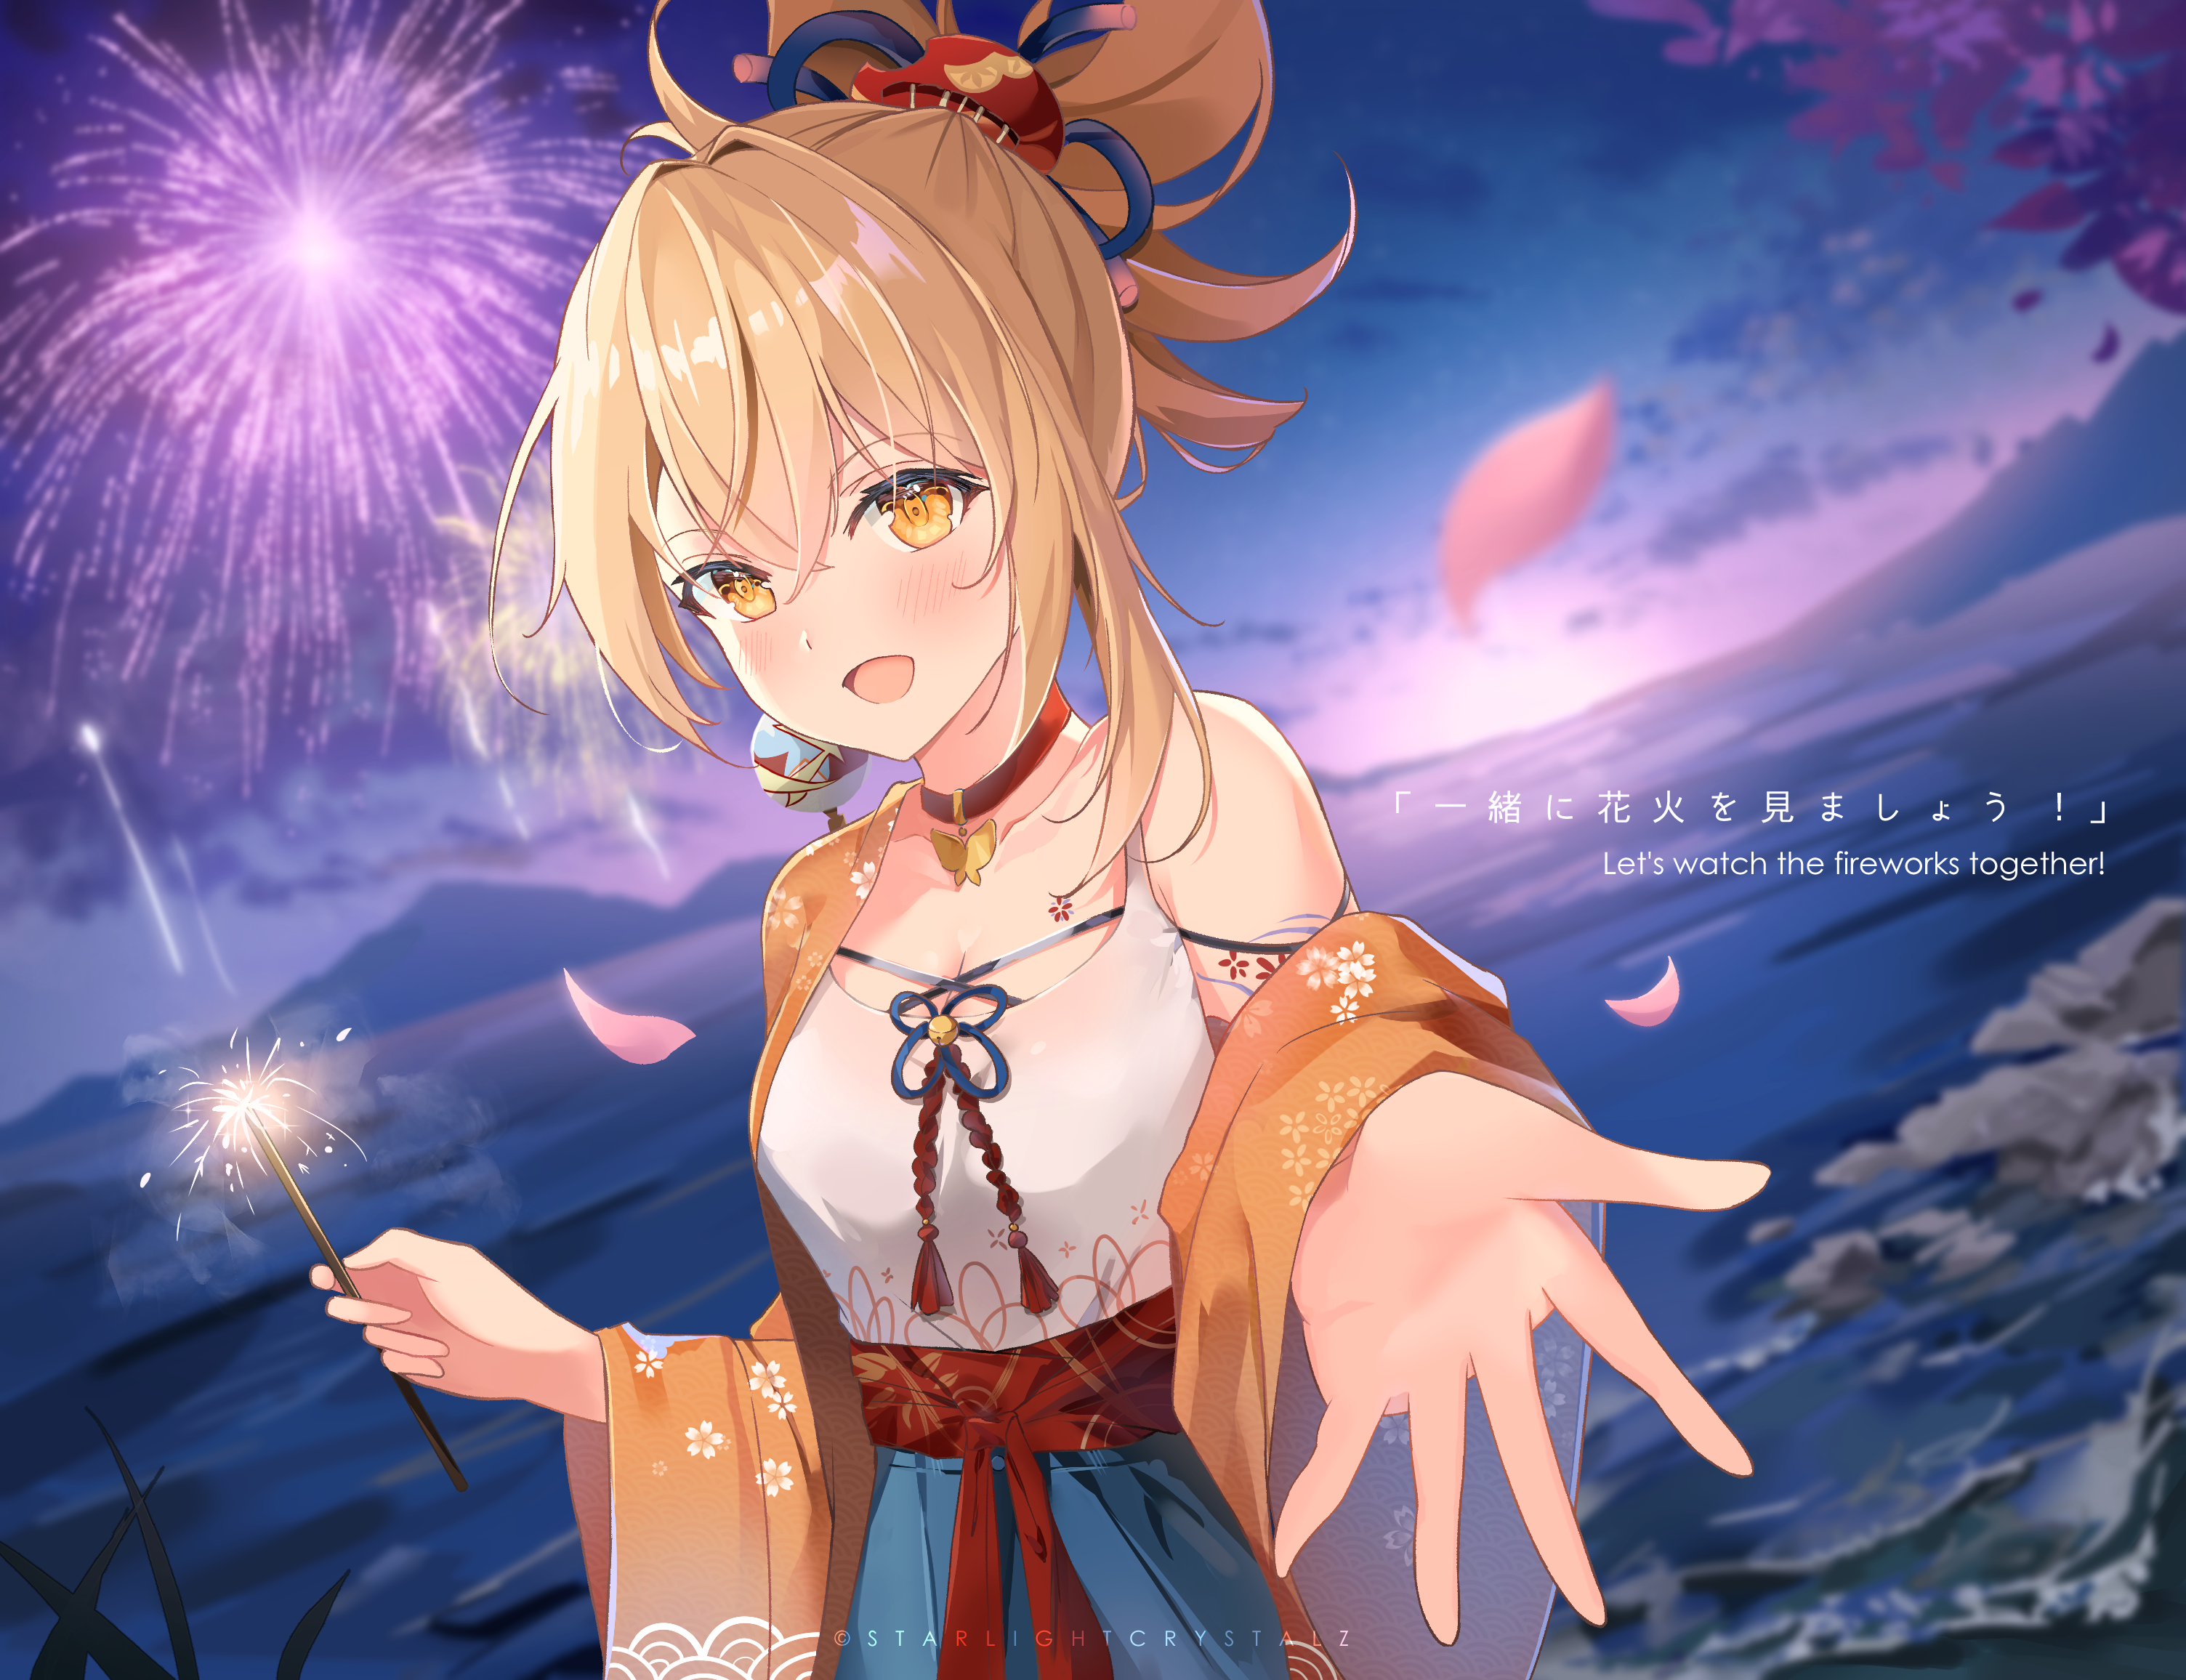 Fireworks with Yoimiya插画图片壁纸